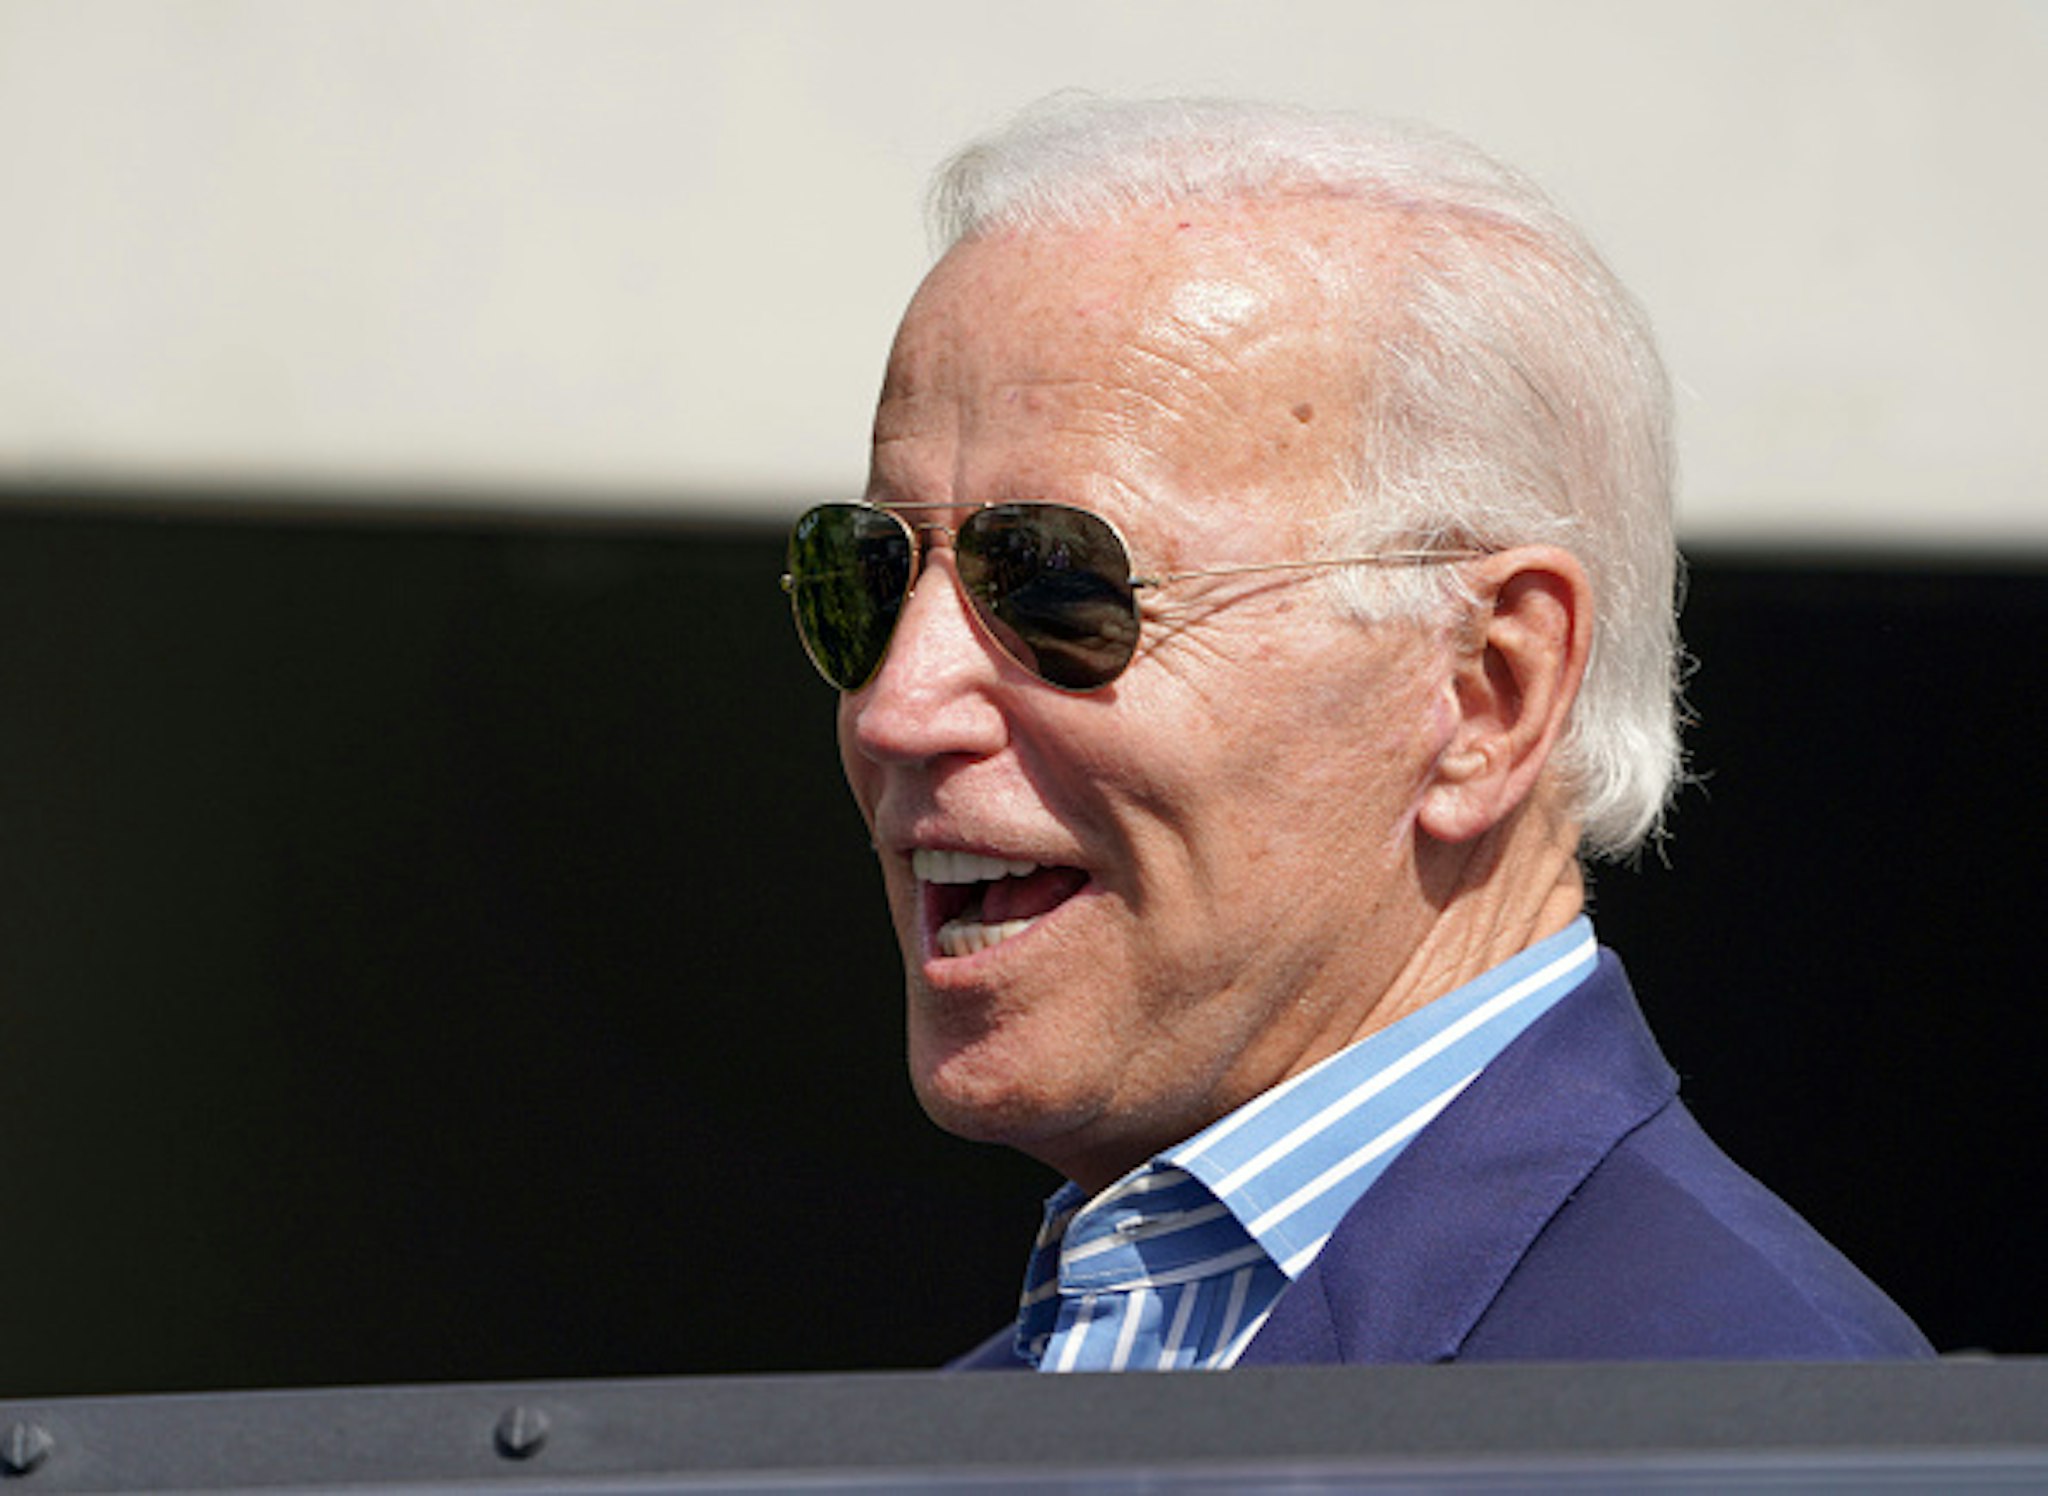 MANHATTAN BEACH, CA - SEPTEMBER 25: Presidential candidate Joe Biden leaves a private fundraiser at a home in Manhattan Beach on Wednesday, Sep. 25, 2019.